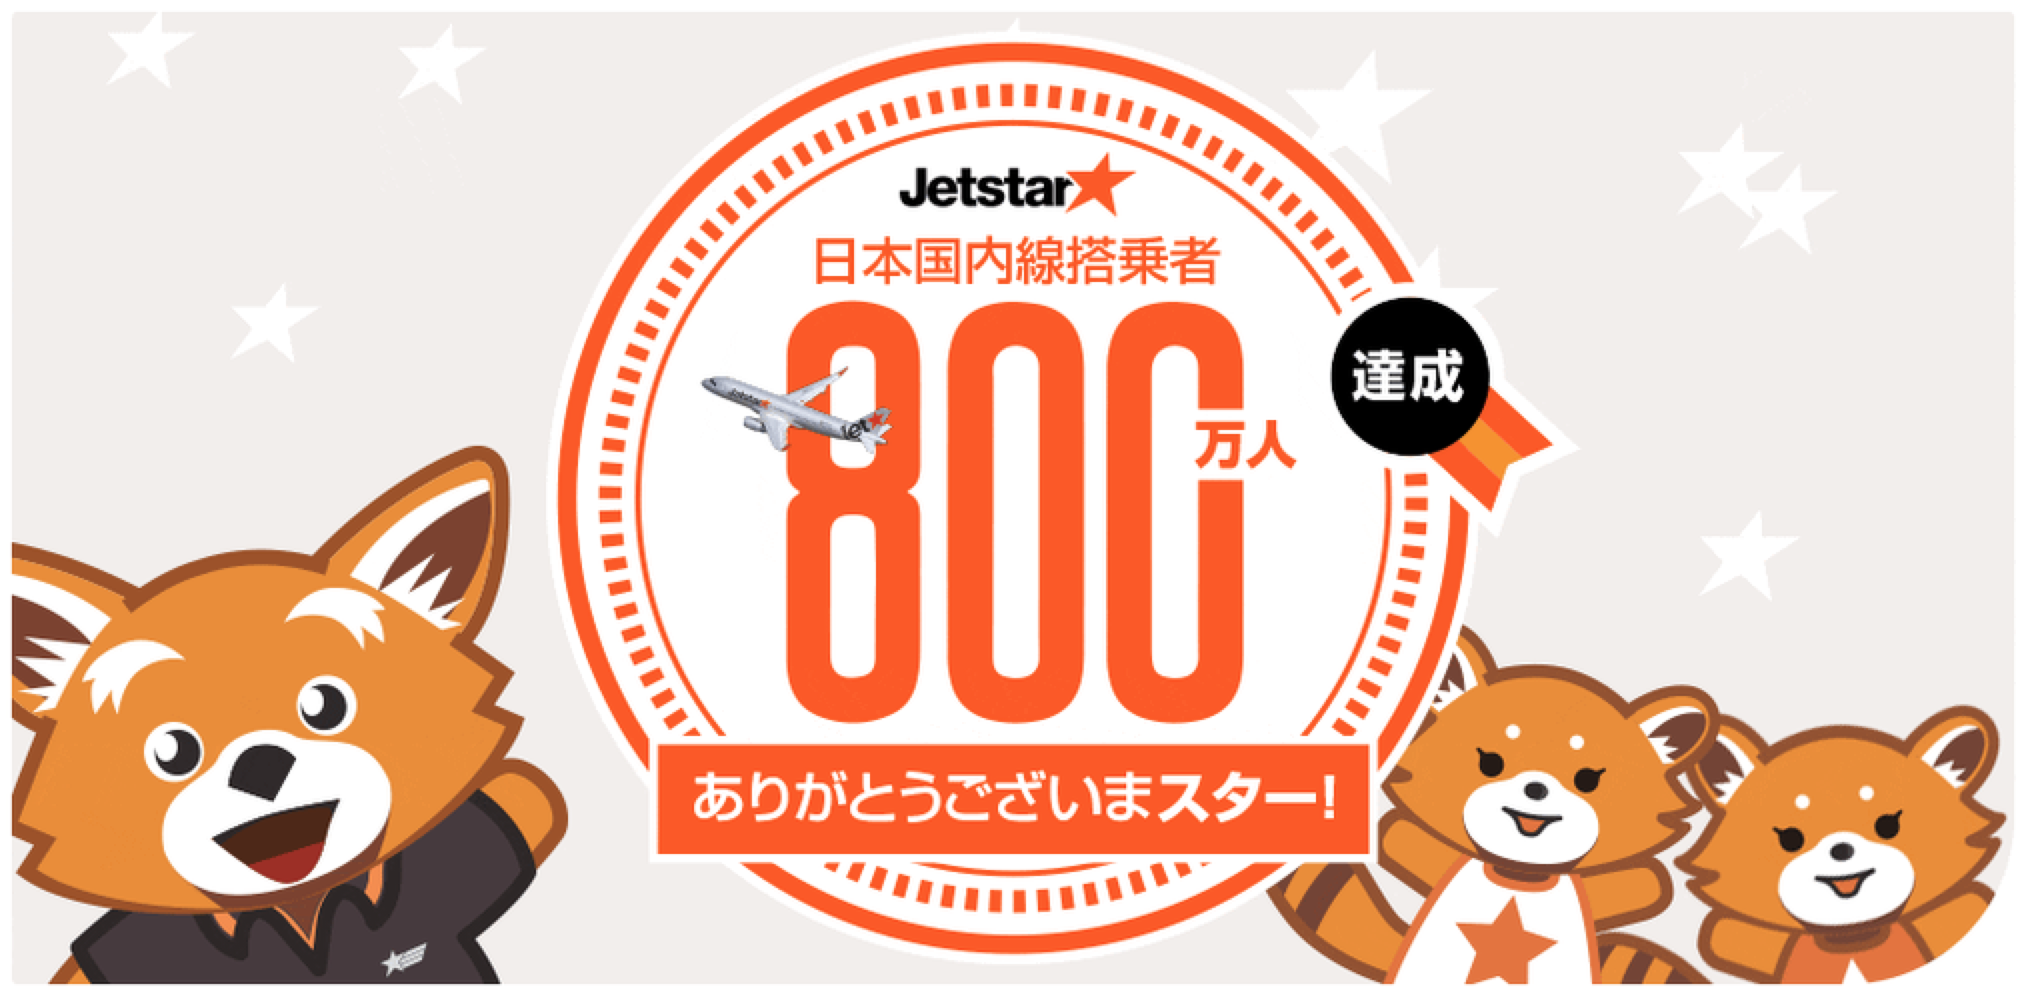 jetstar800.png